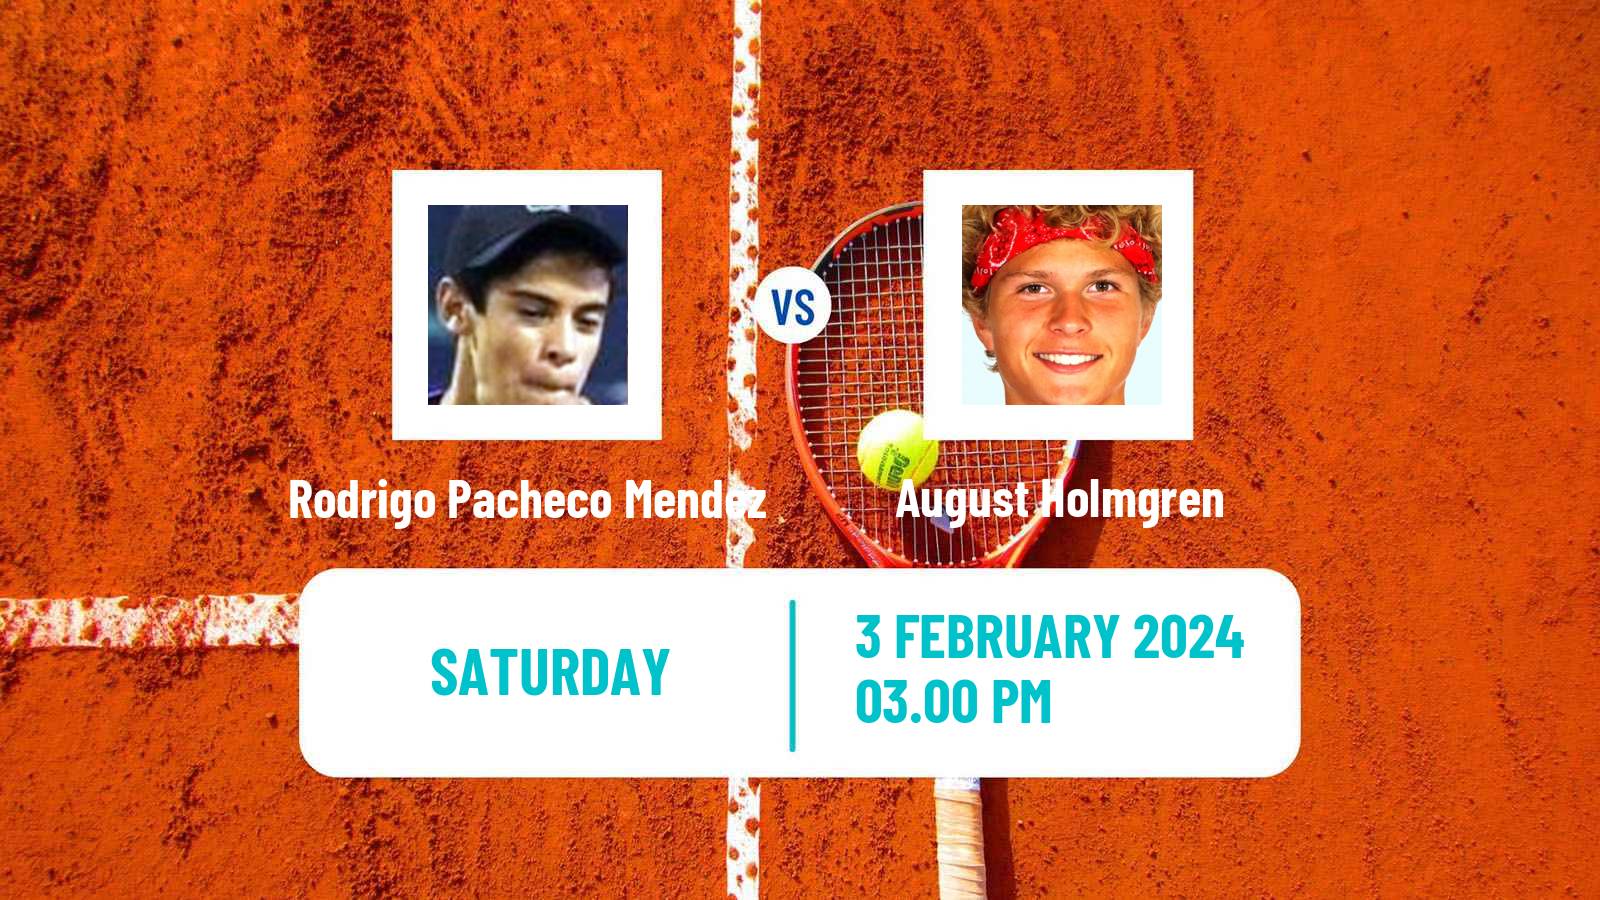 Tennis Davis Cup World Group I Rodrigo Pacheco Mendez - August Holmgren